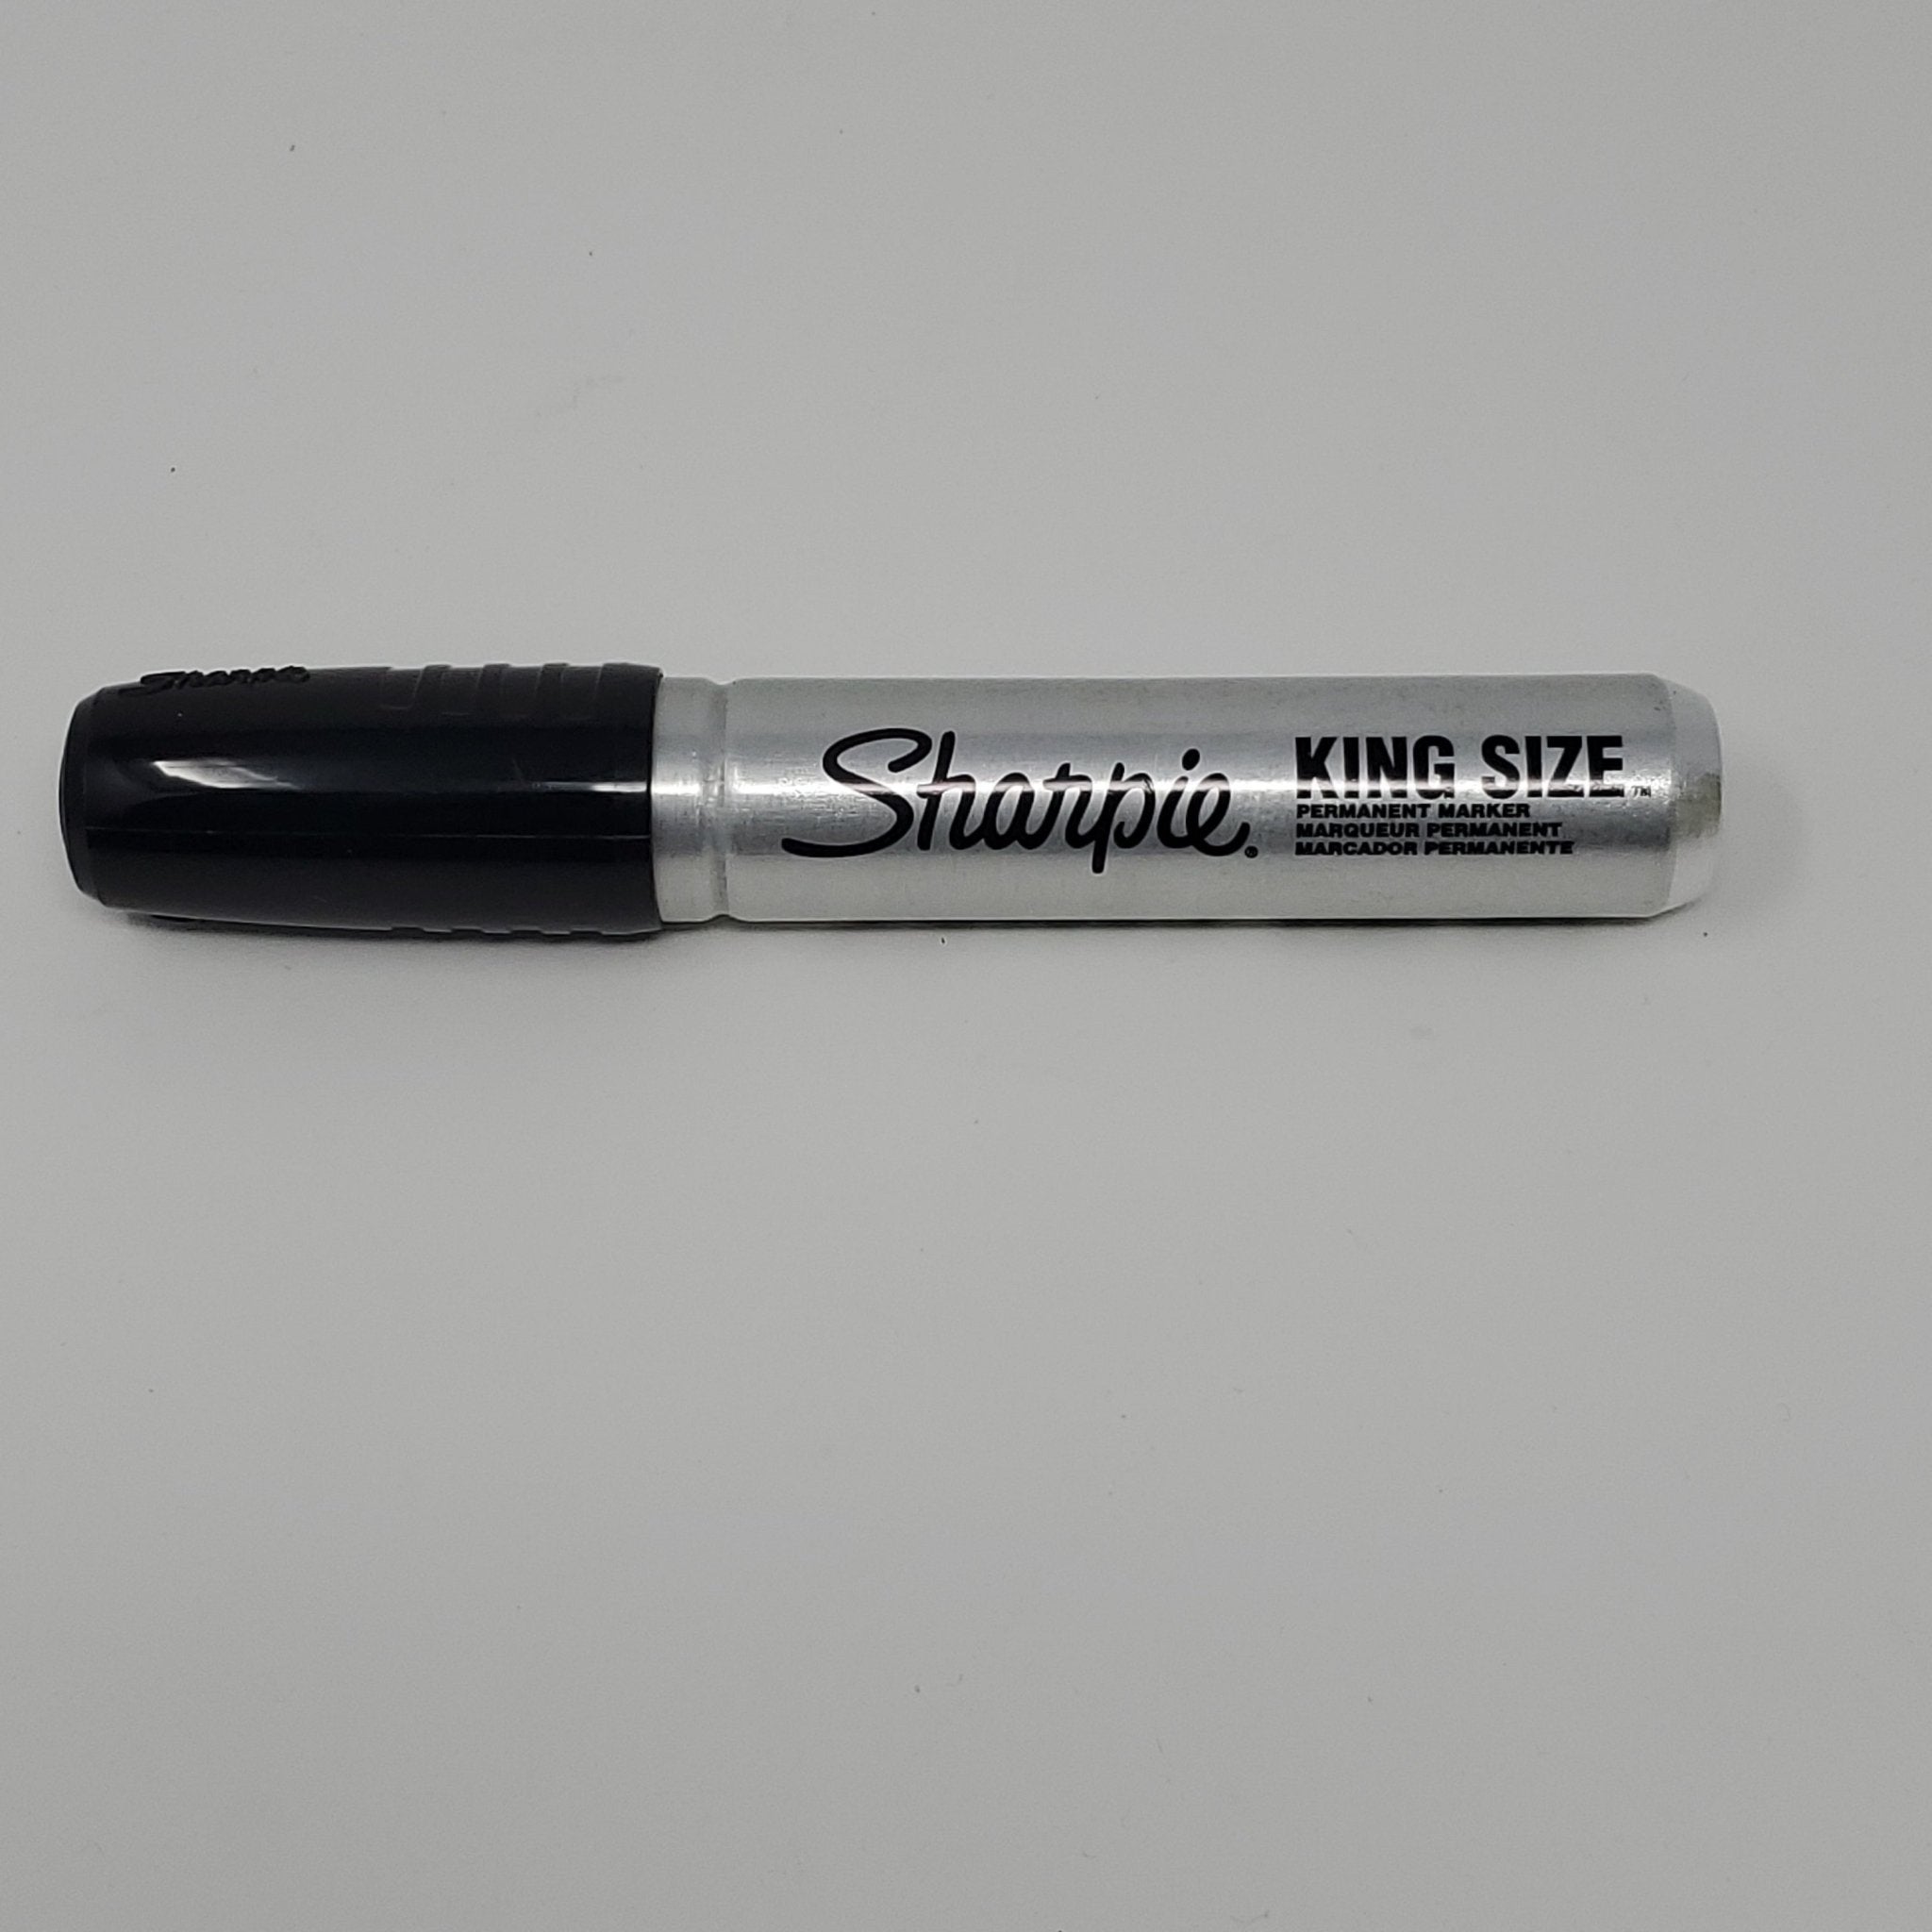 Sharpie 15001 King Size Permanent Marker, Black, 12 Markers - Bargainwizz